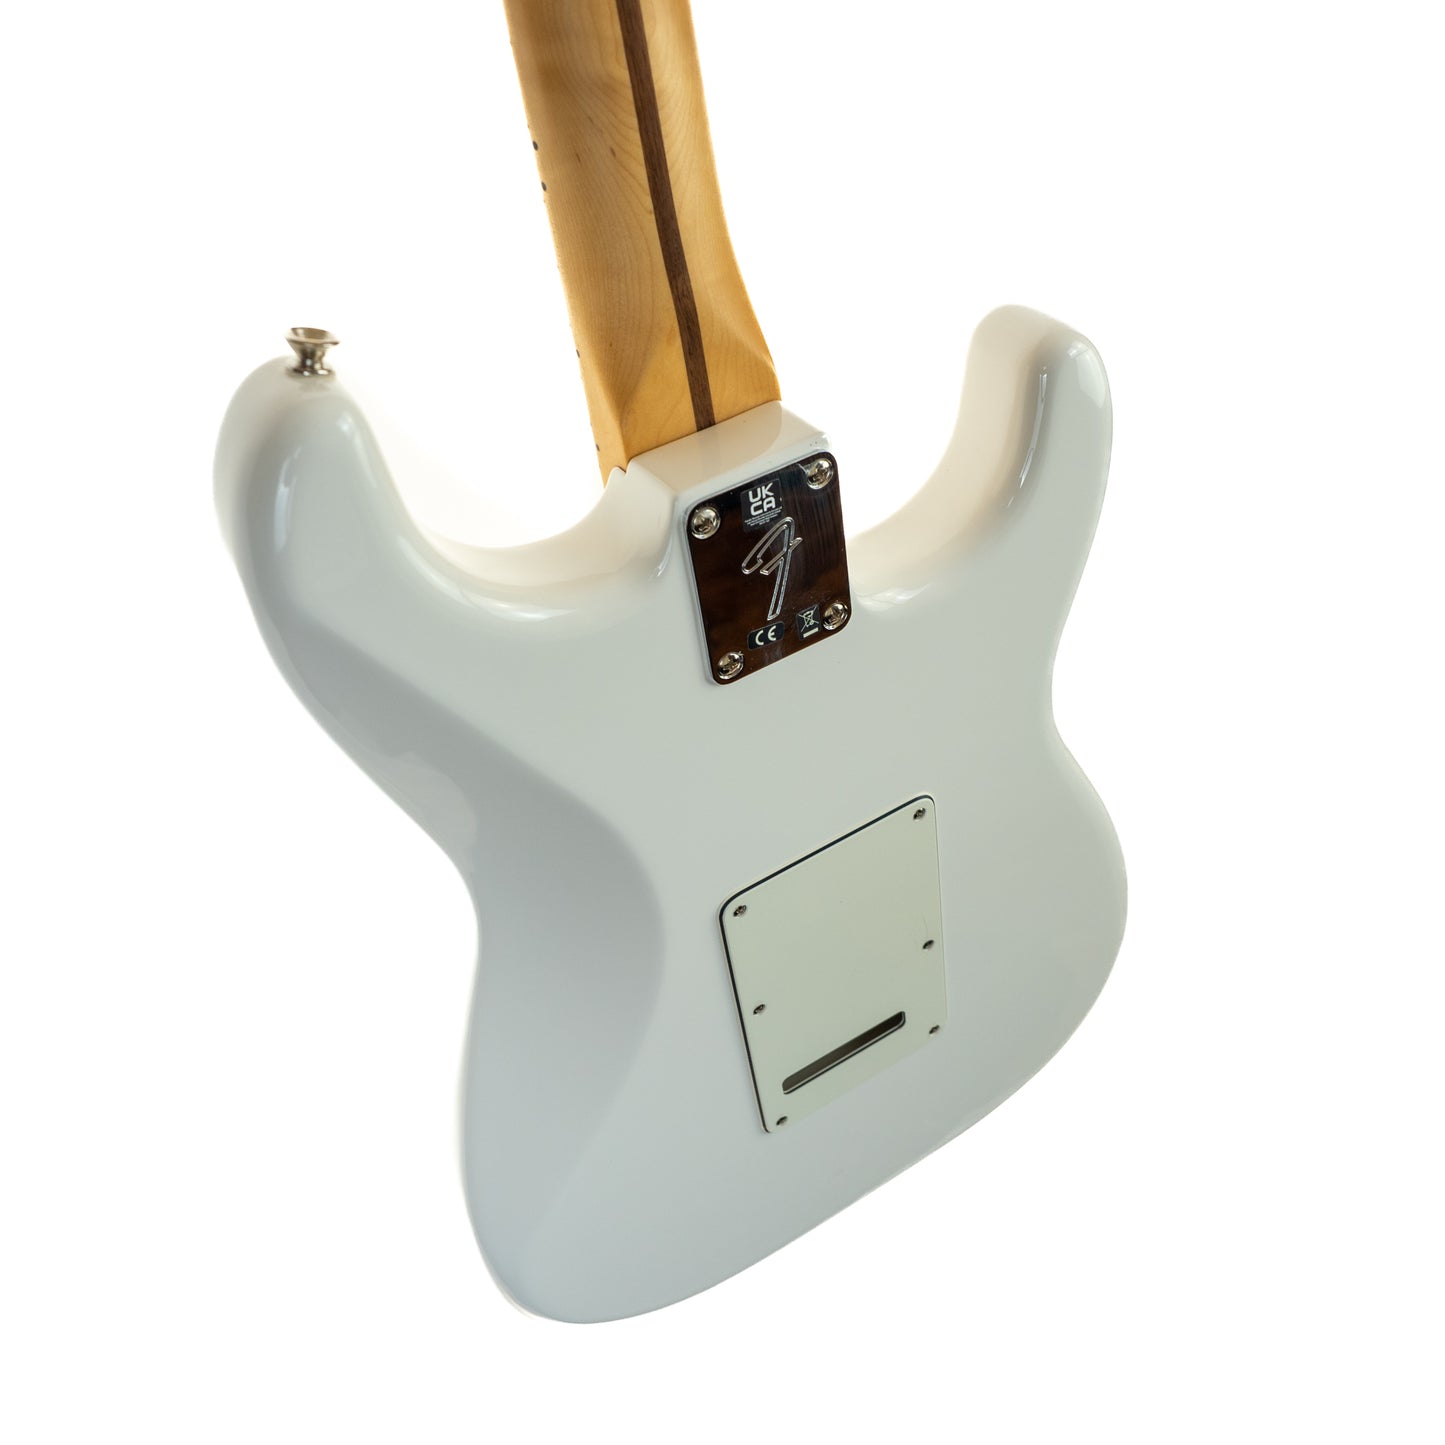 Fender Player Stratocaster Left handed lefty maple neck, polar white electric guitar.